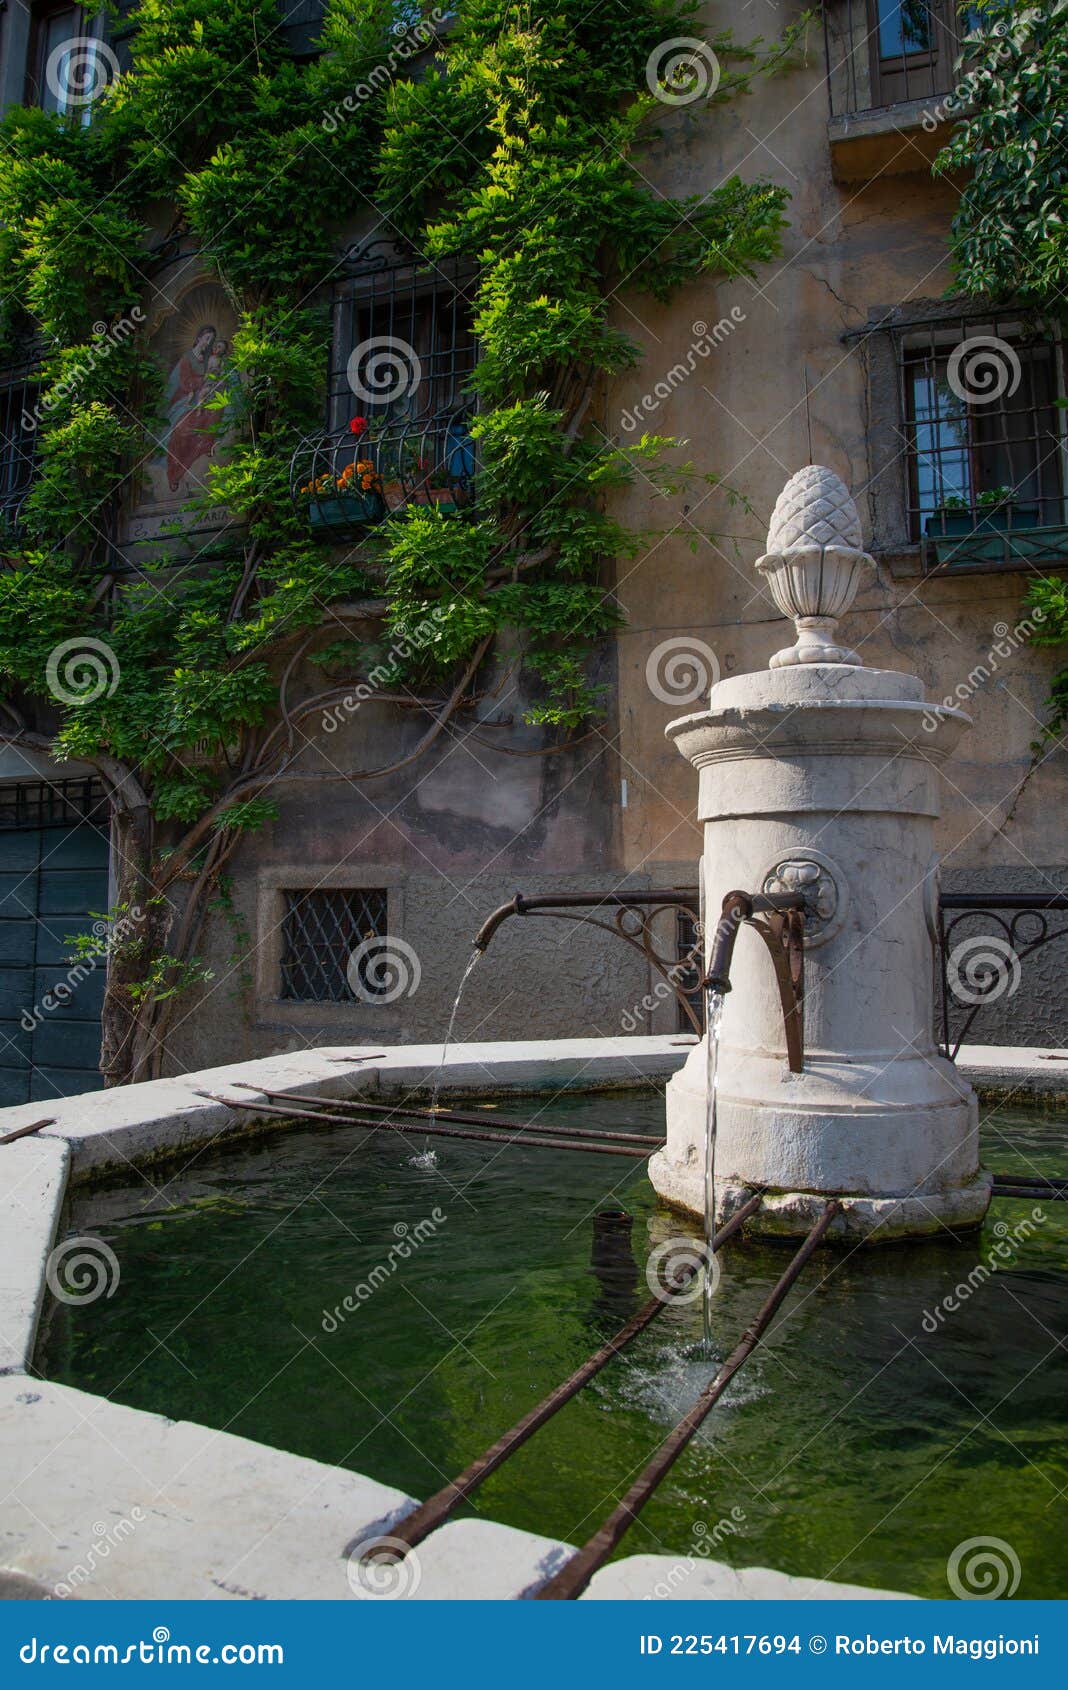 bagolino medieval village, public water fountain in the central square